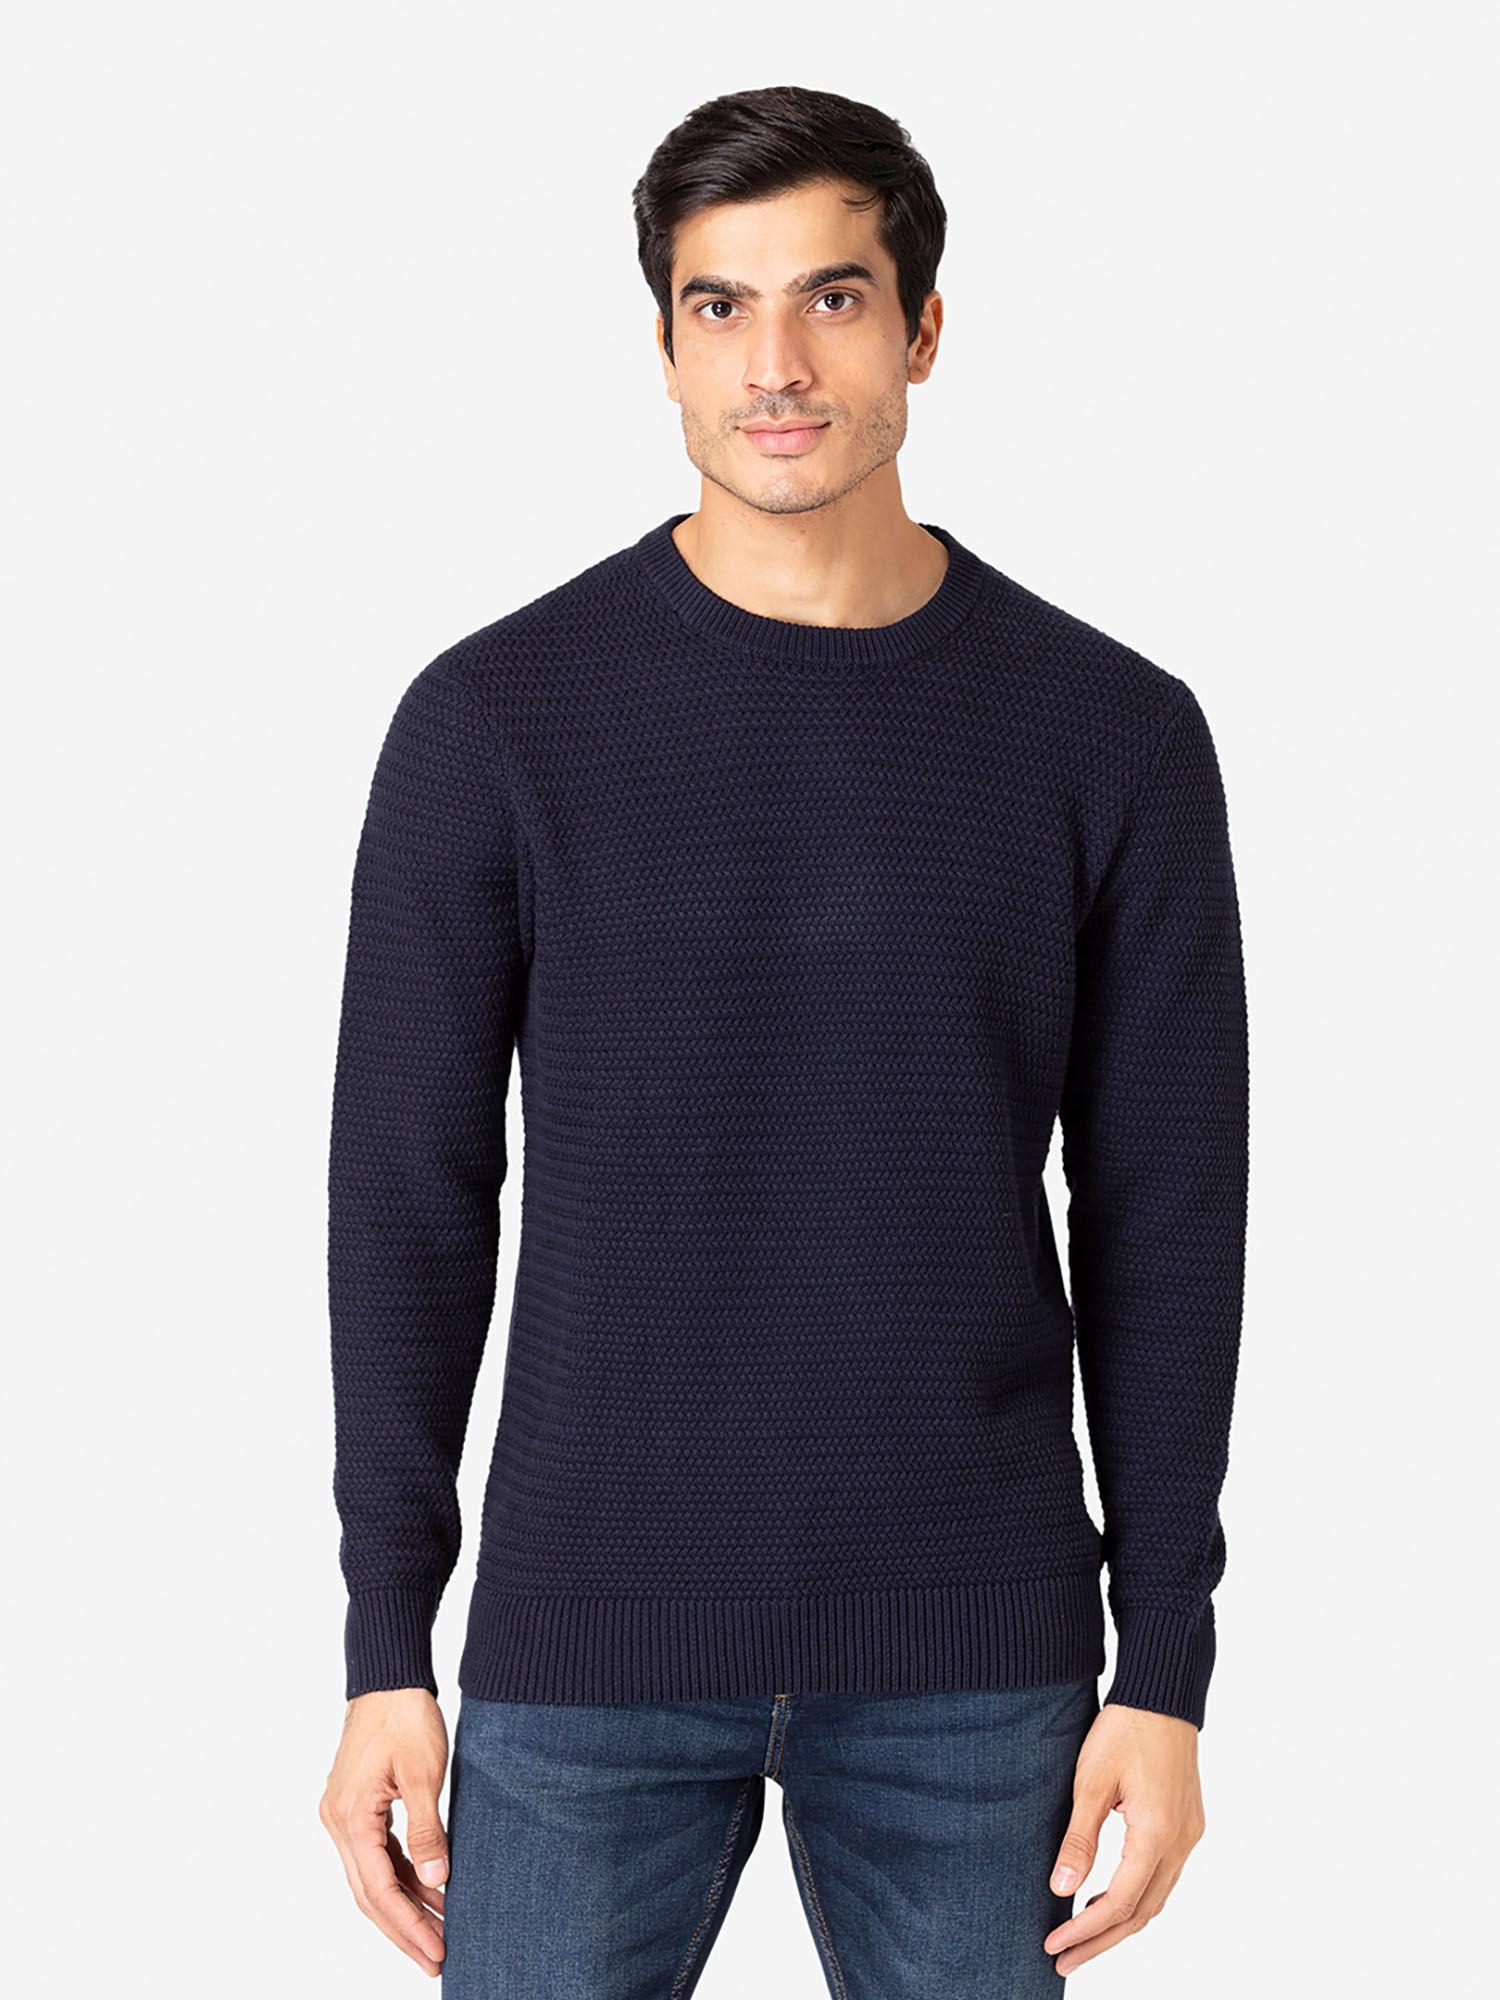 mens navy sweater